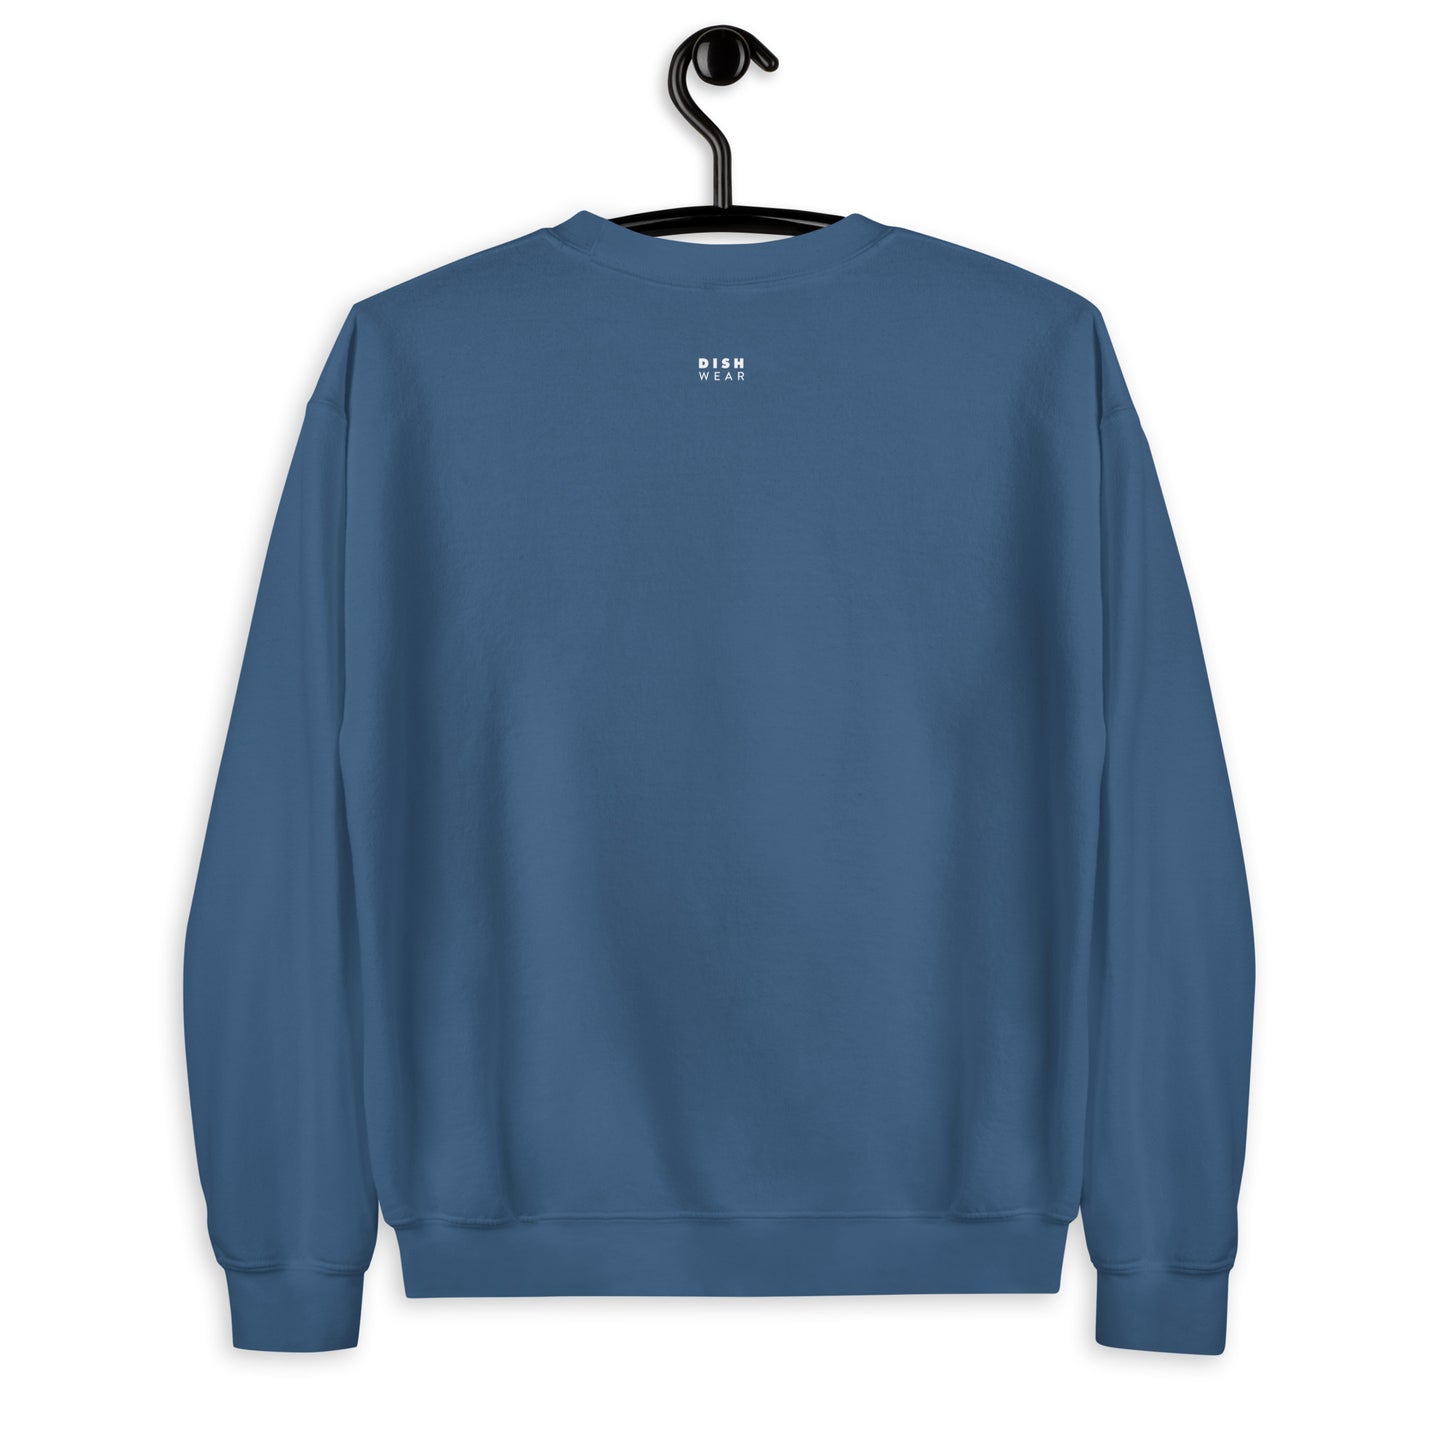 Truffle Sweatshirt - Straight Font